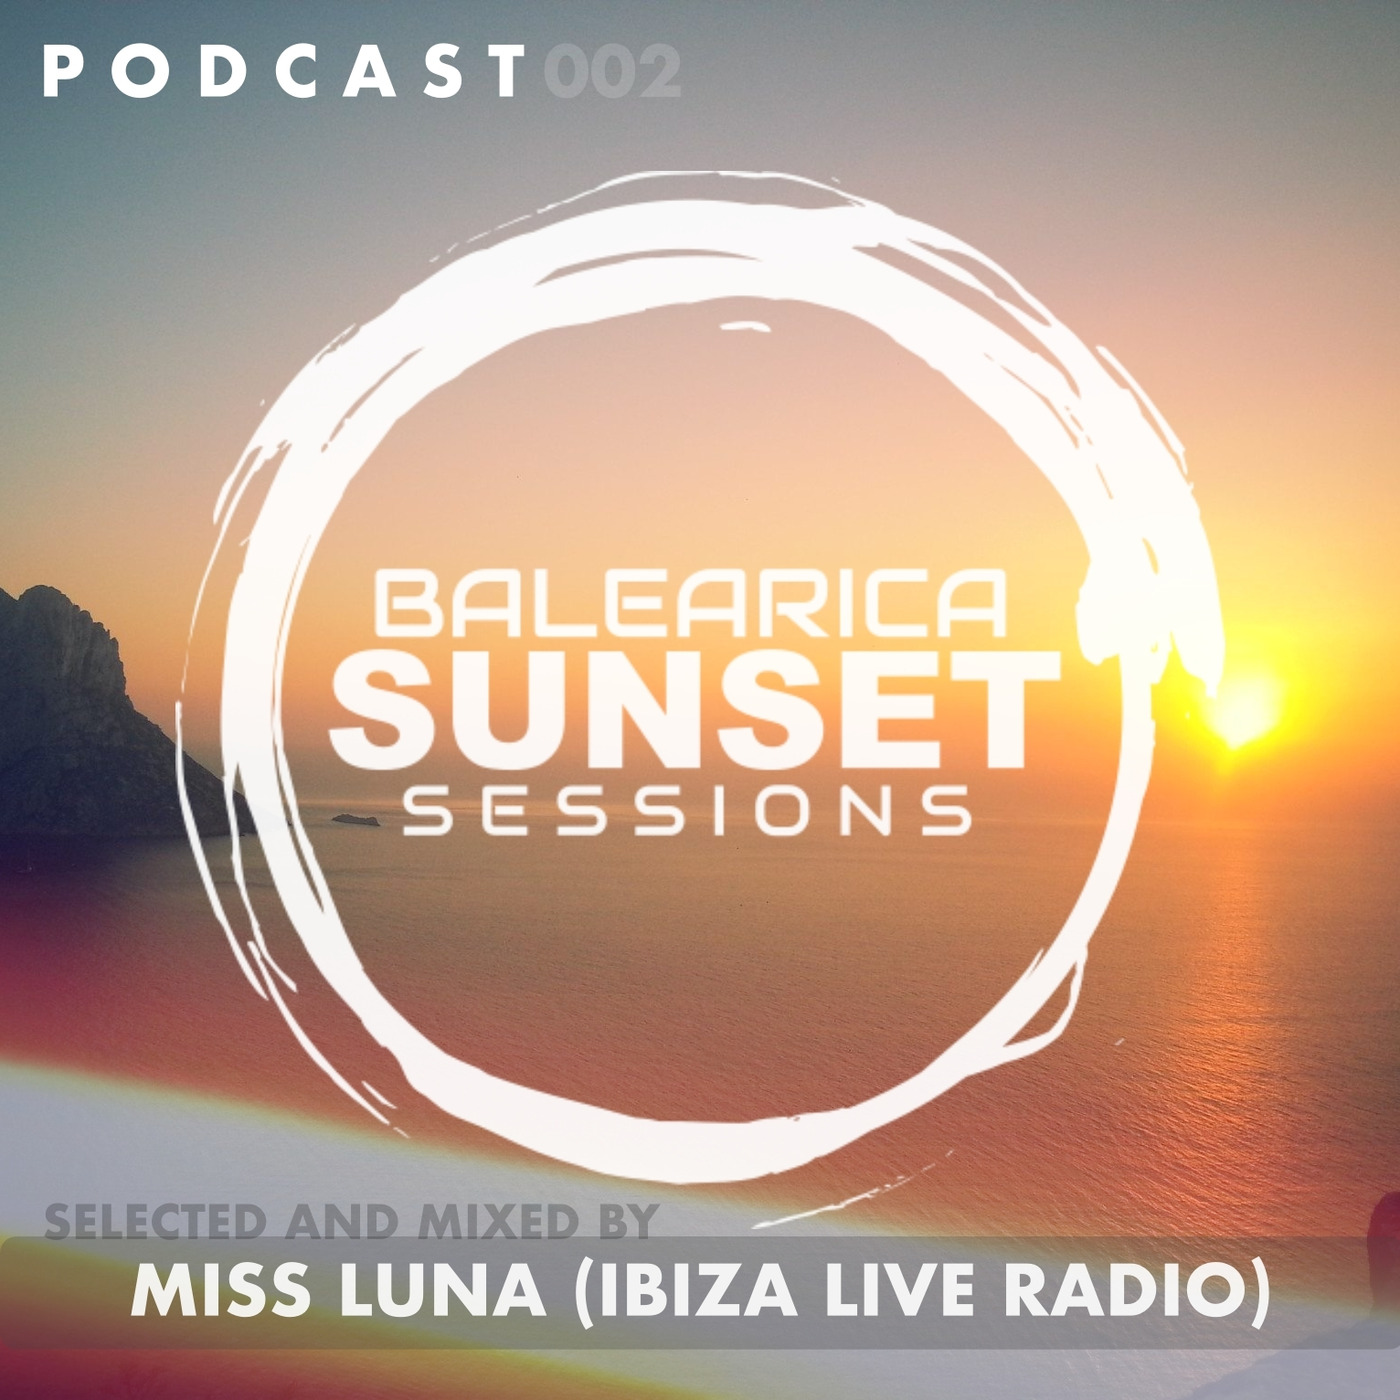 BALEARICA SUNSET SESSIONS PODCAST 002 MISS LUNA (Ibiza Live Radio)